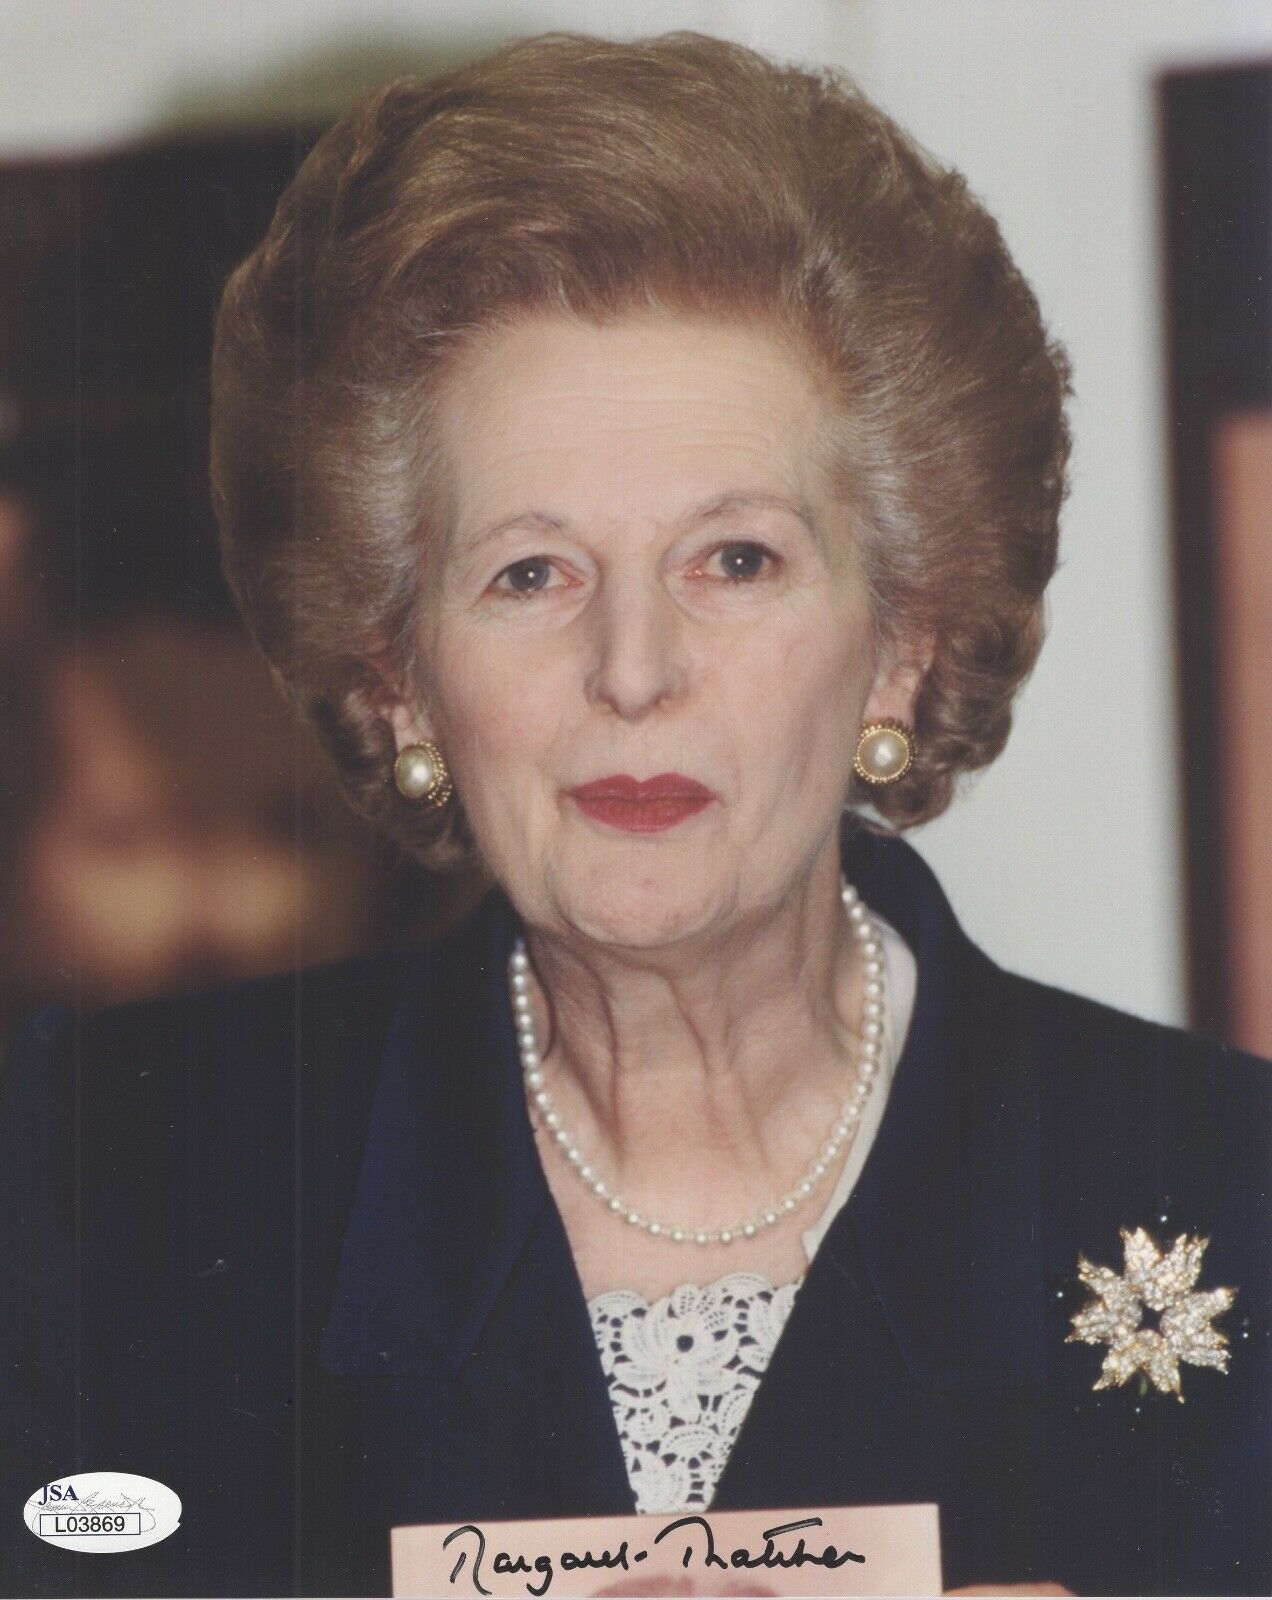 Margaret Thatcher Hand Signed 8x10 Photo Jsa British Prime Minister Iron Lady Autographia